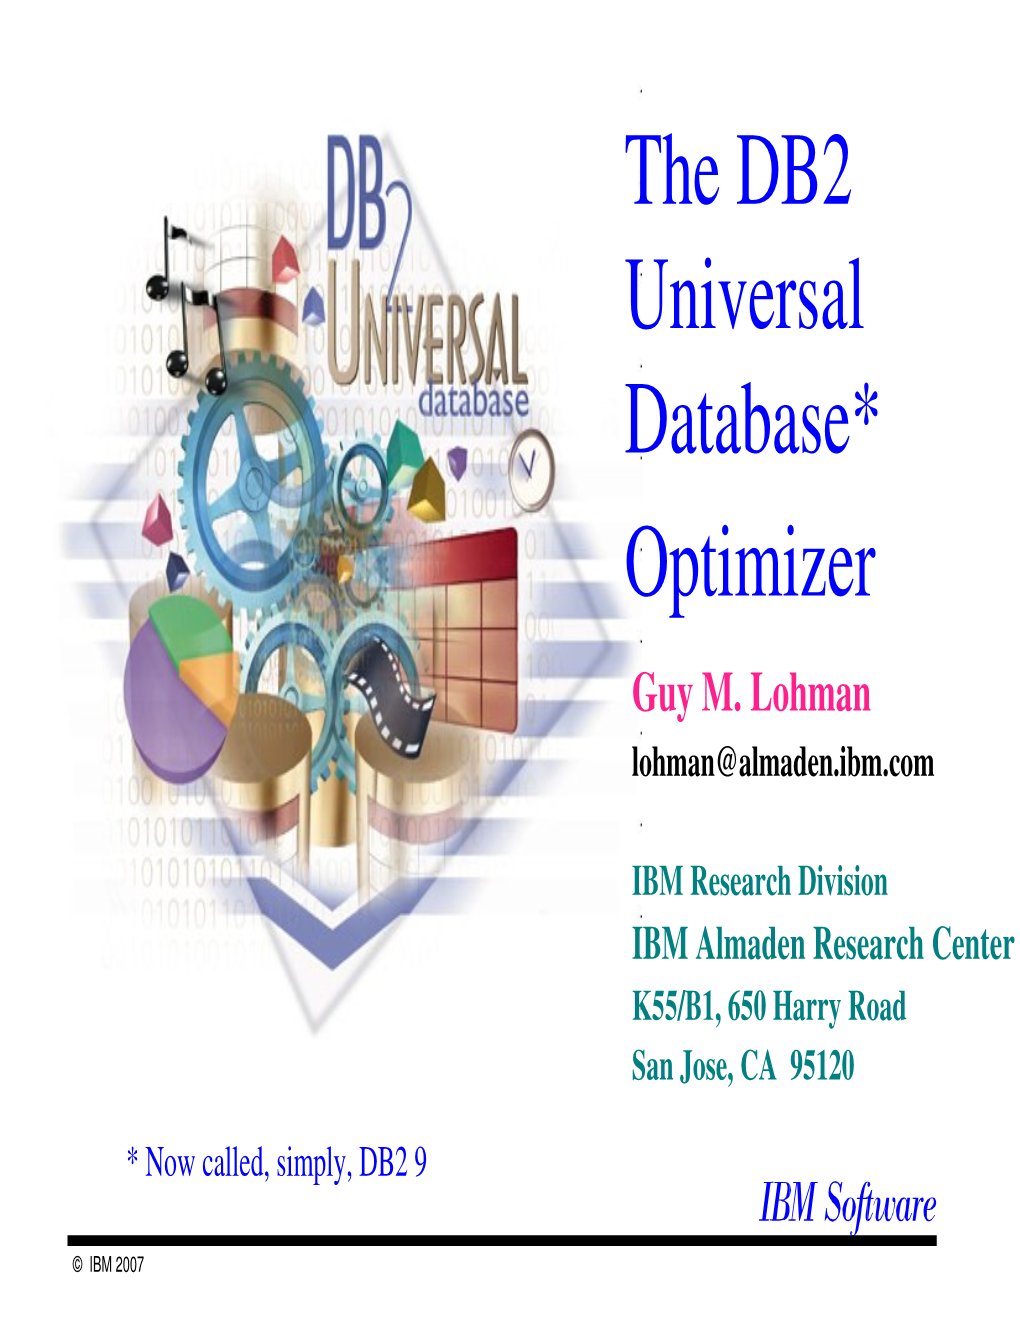 DB2 Universal Database* Optimizer Guy M